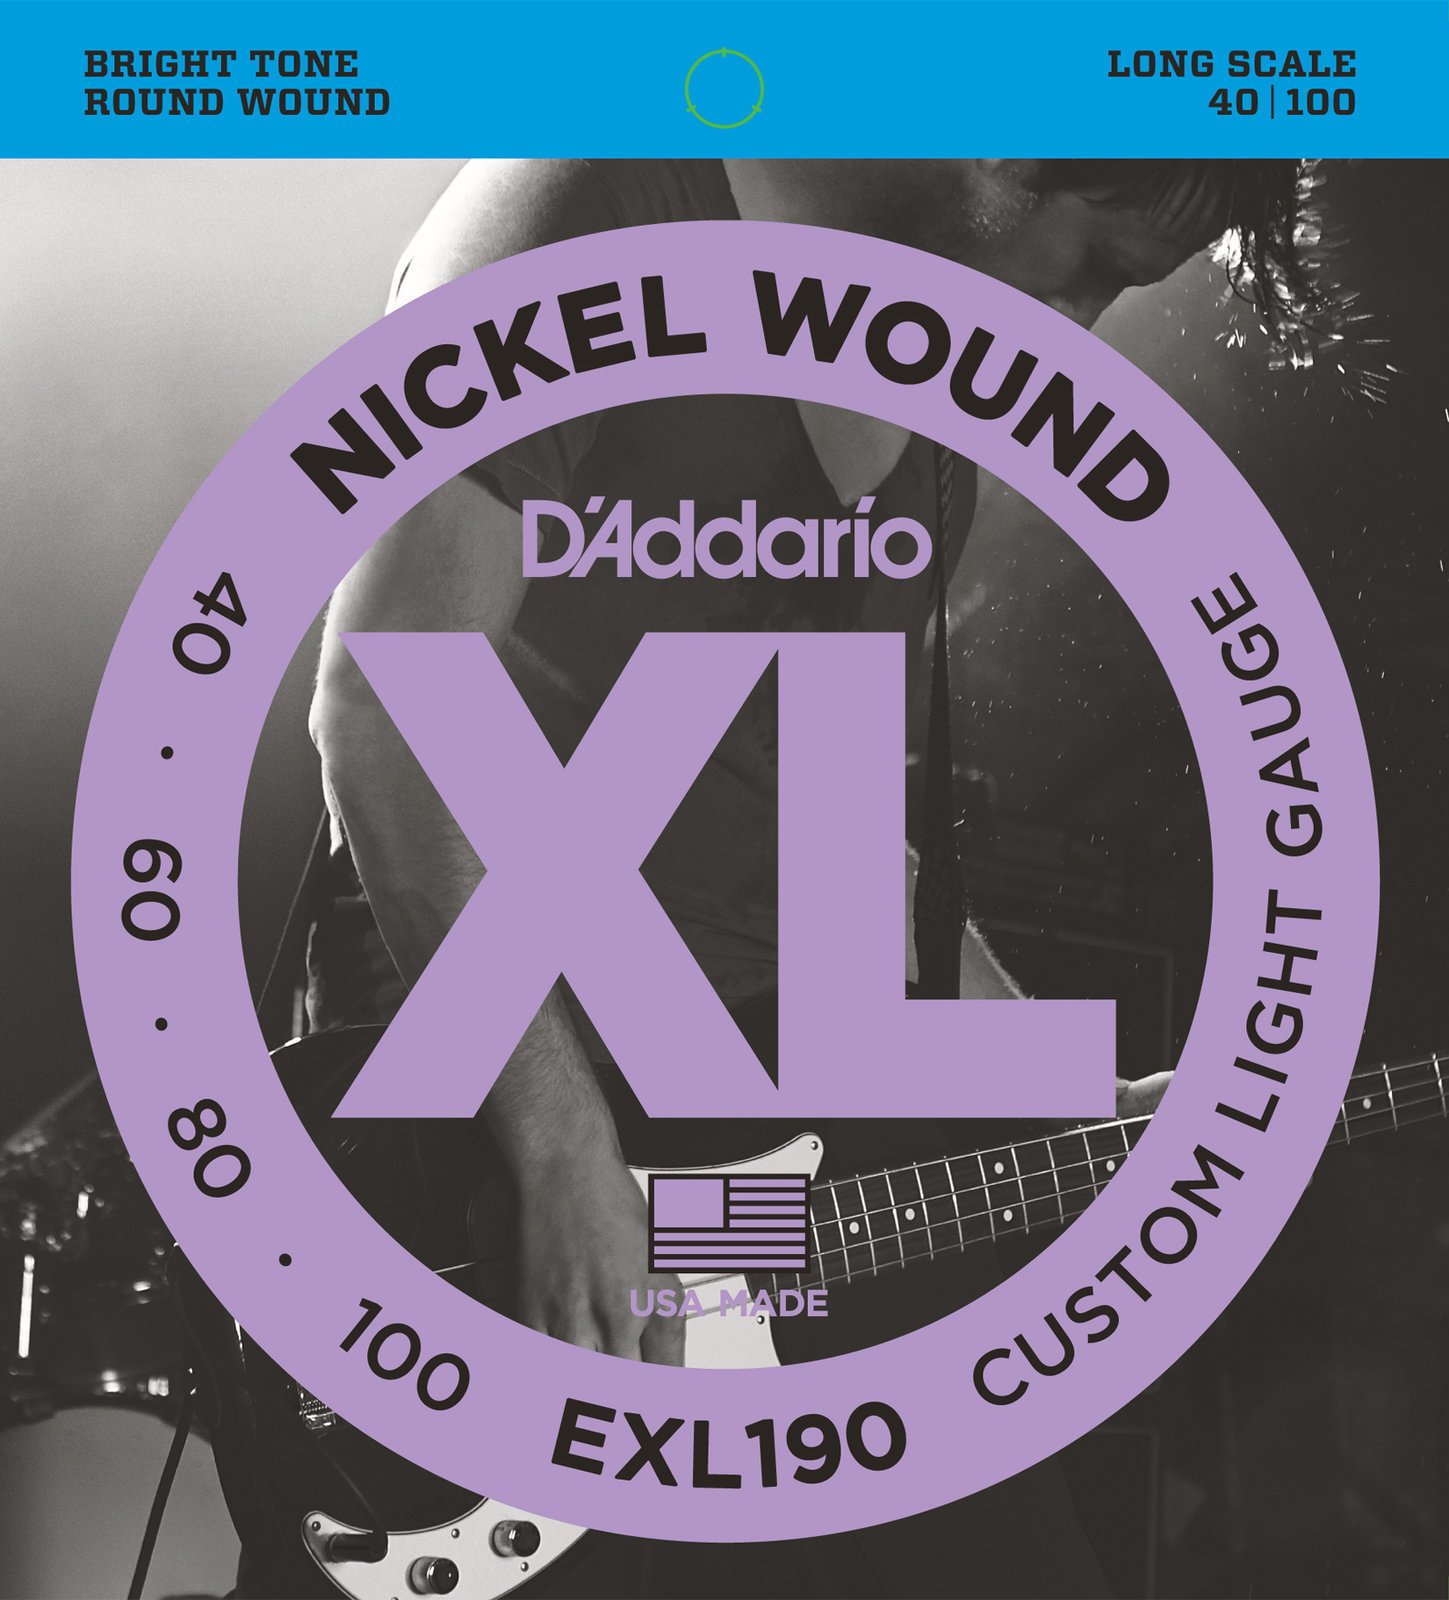 Bassguitar strings D'Addario EXL190